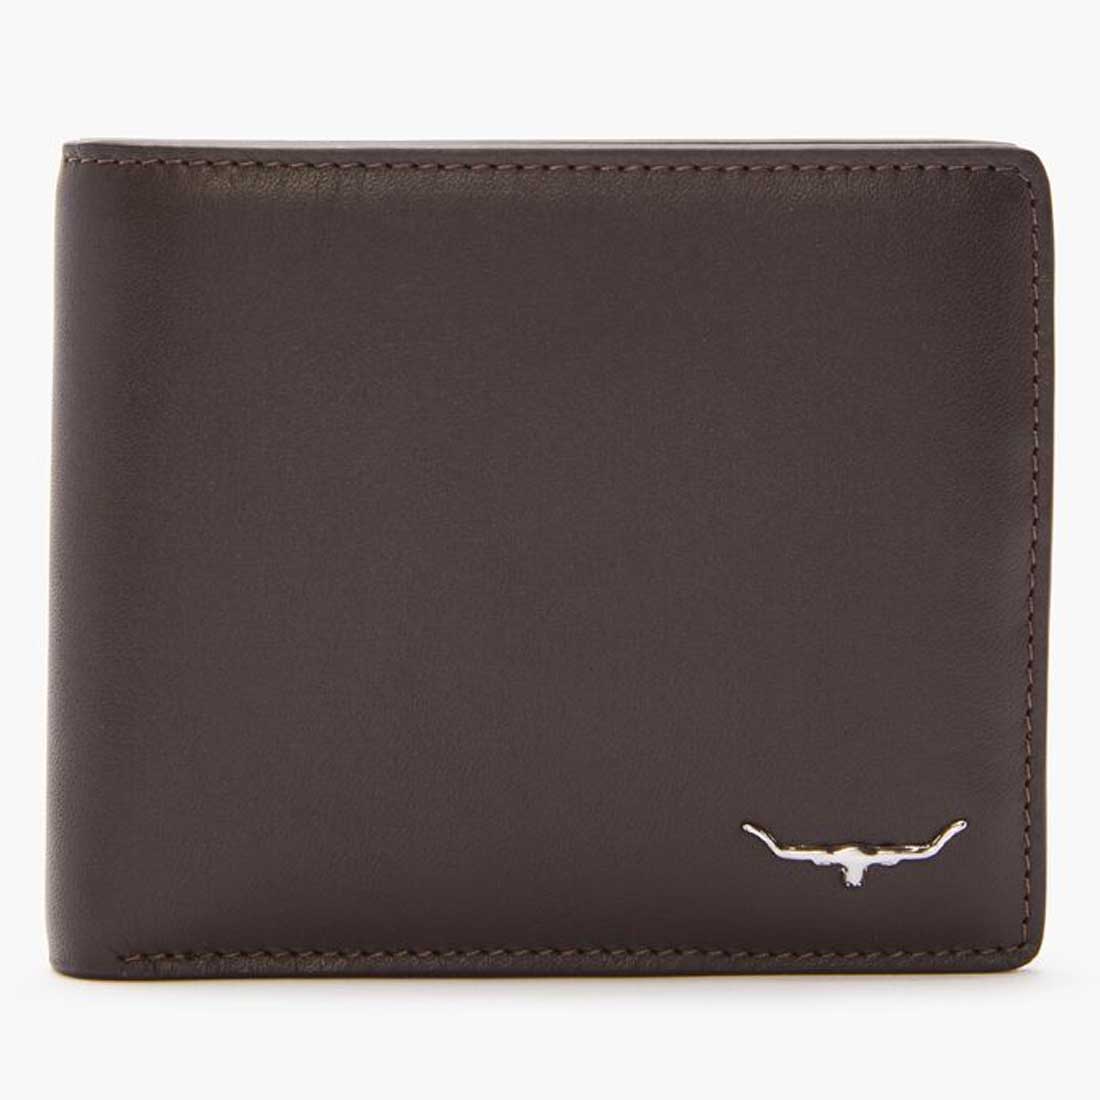 RM WILLIAMS Bi-Fold Wallet - Men's City Slim Leather - Chocolate